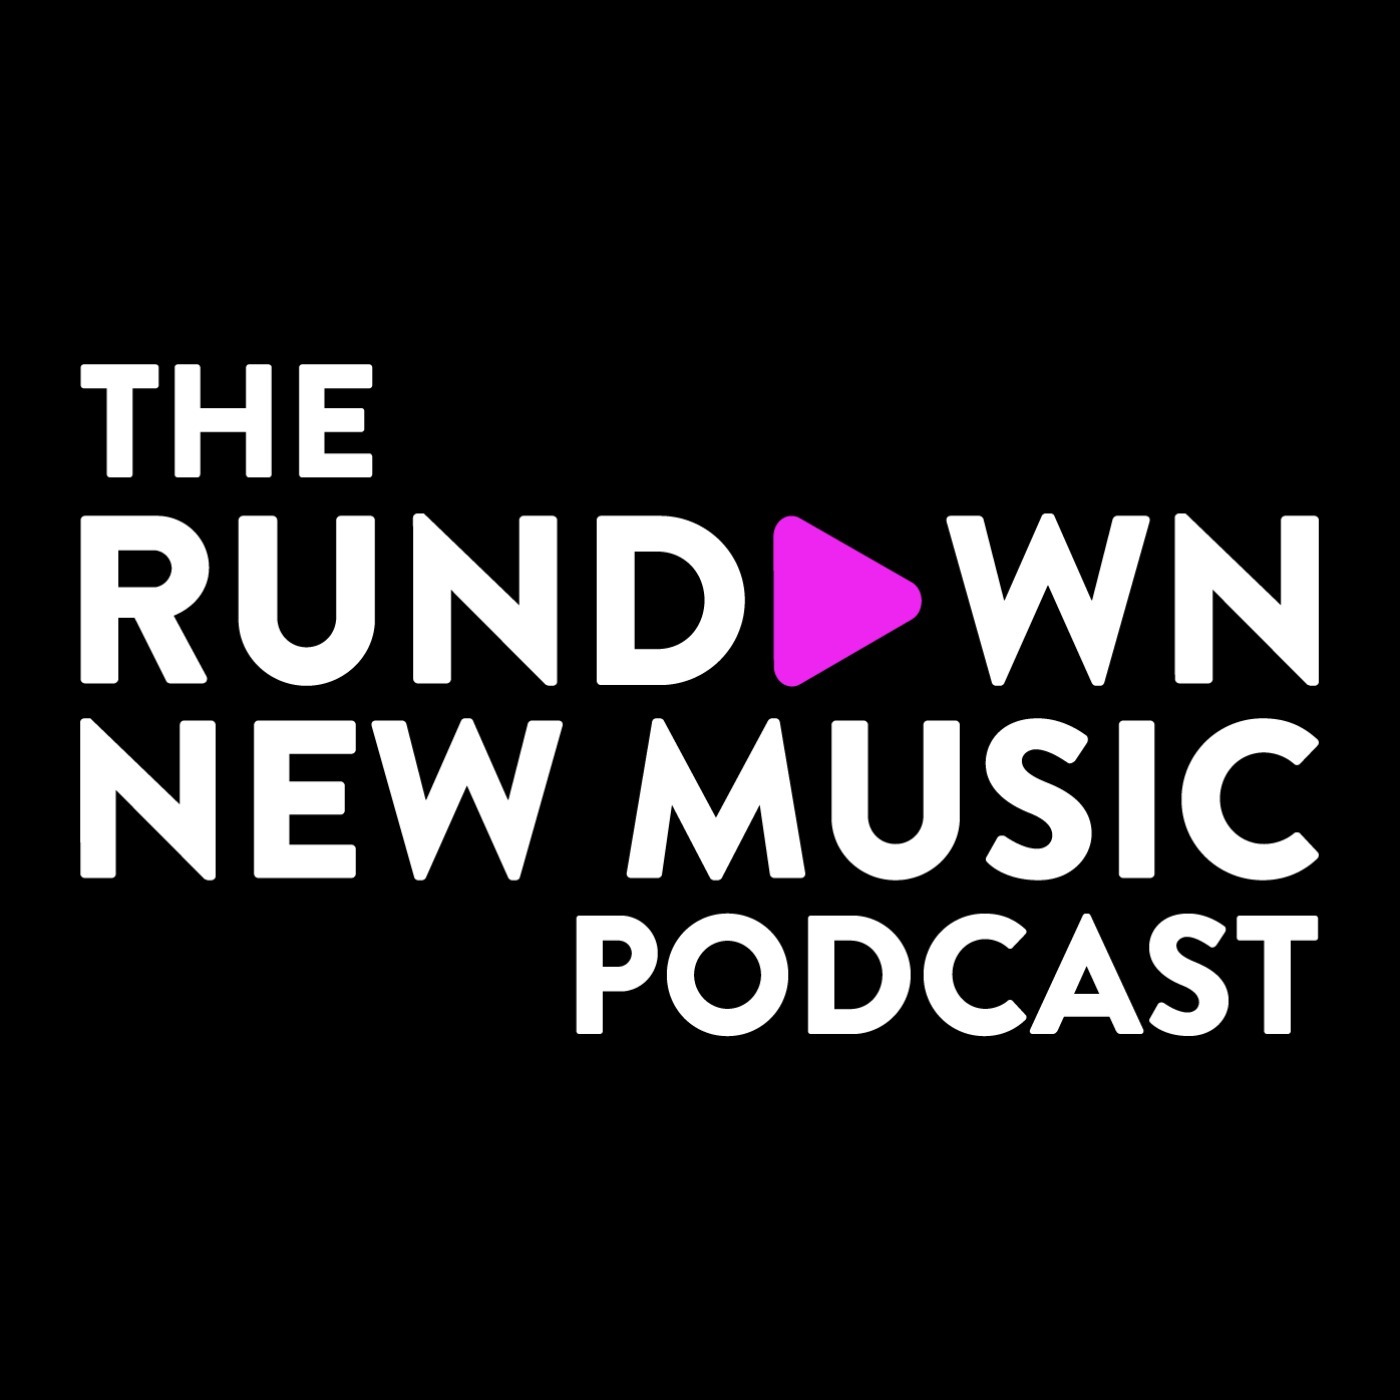 Return of The Rundown New Music Podcast!